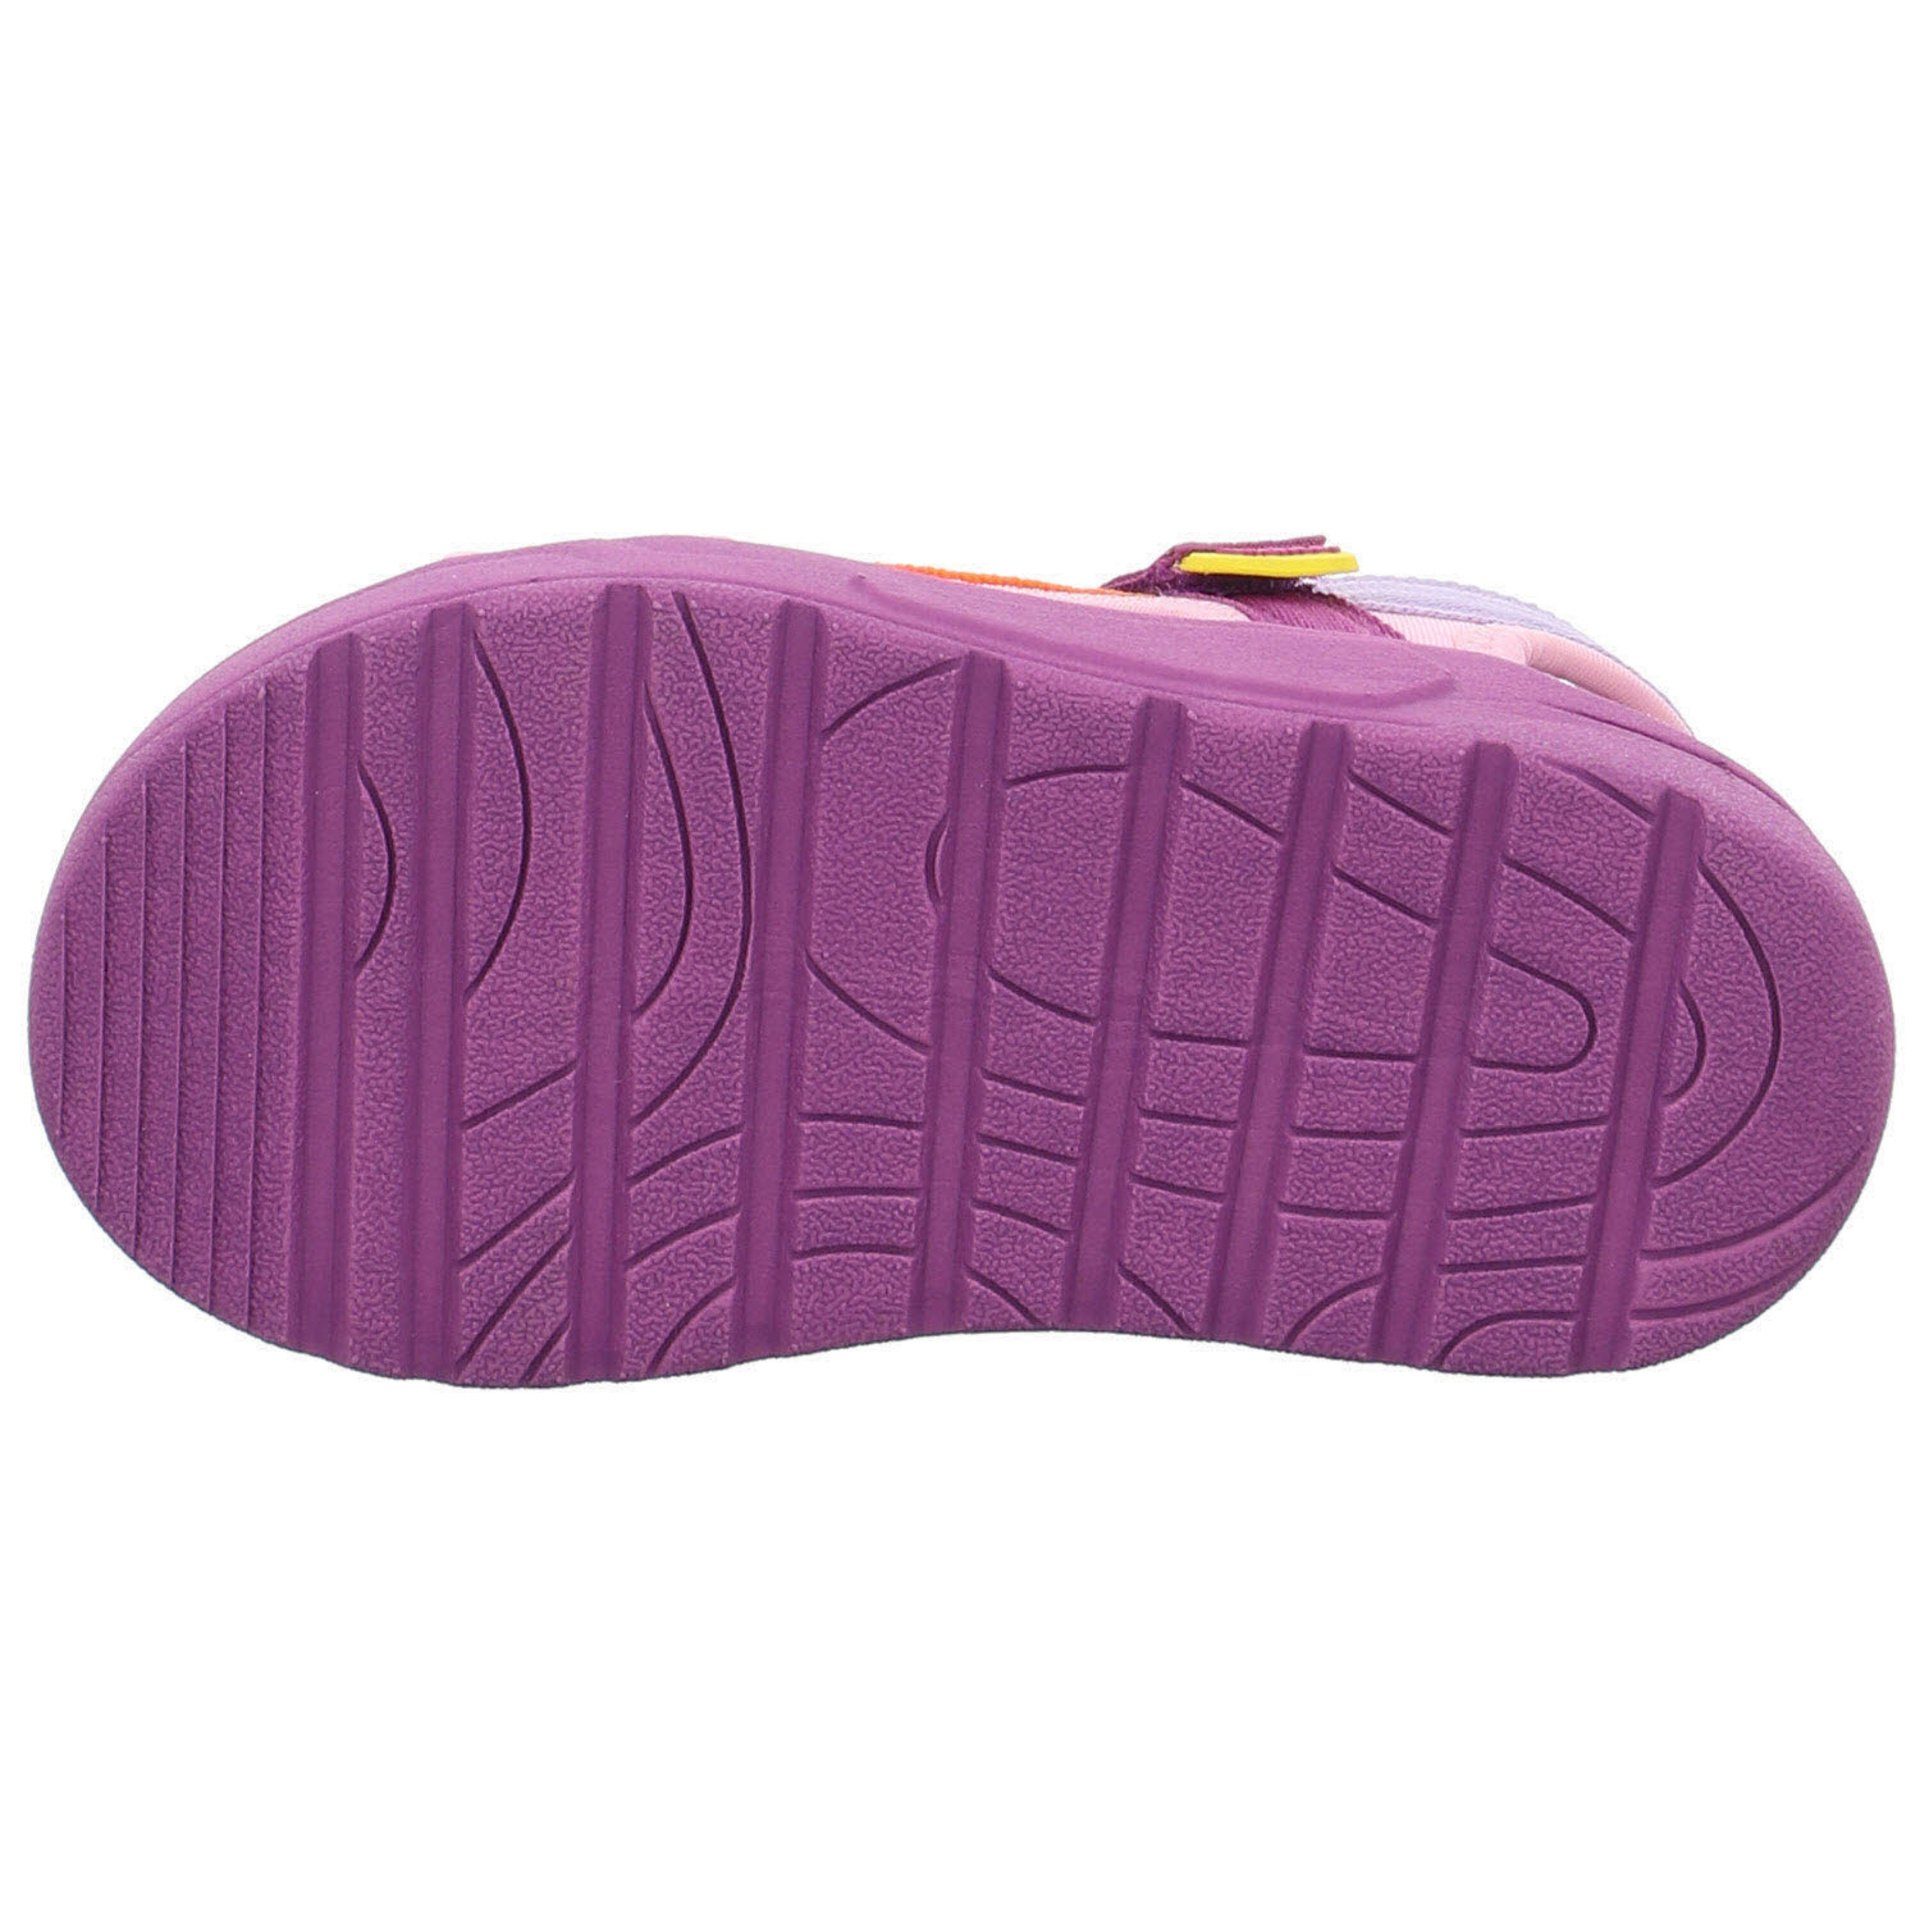 Sandalen Schuhe Mädchen pink/pine Textil Kinderschuhe Sandale Sandale Richter